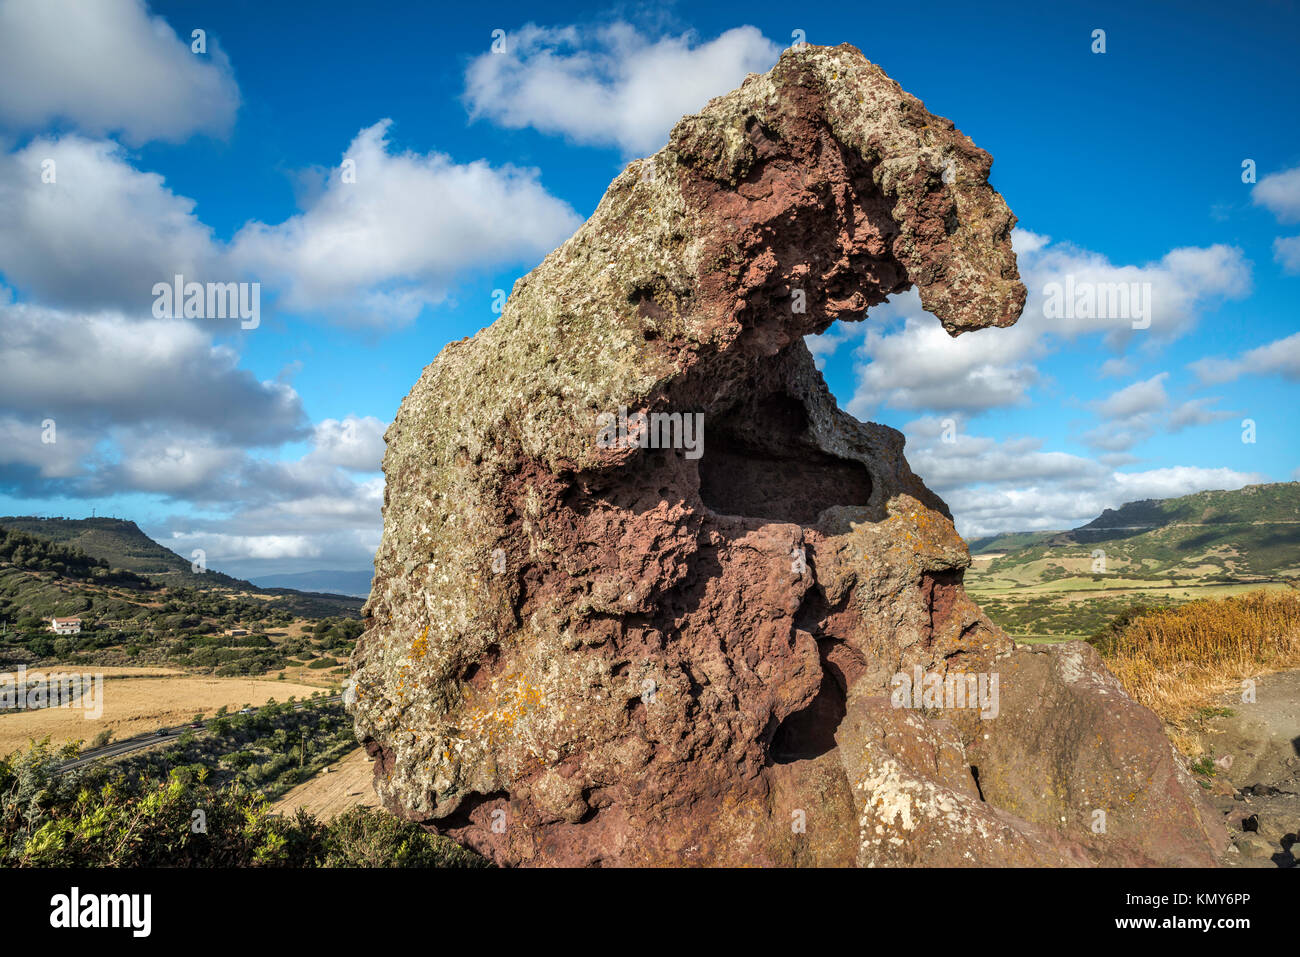 Roccia dell'Elefante, red trachyte Elephant Rock, near Castelsardo, Sassari province, Sardinia, Italy Stock Photo